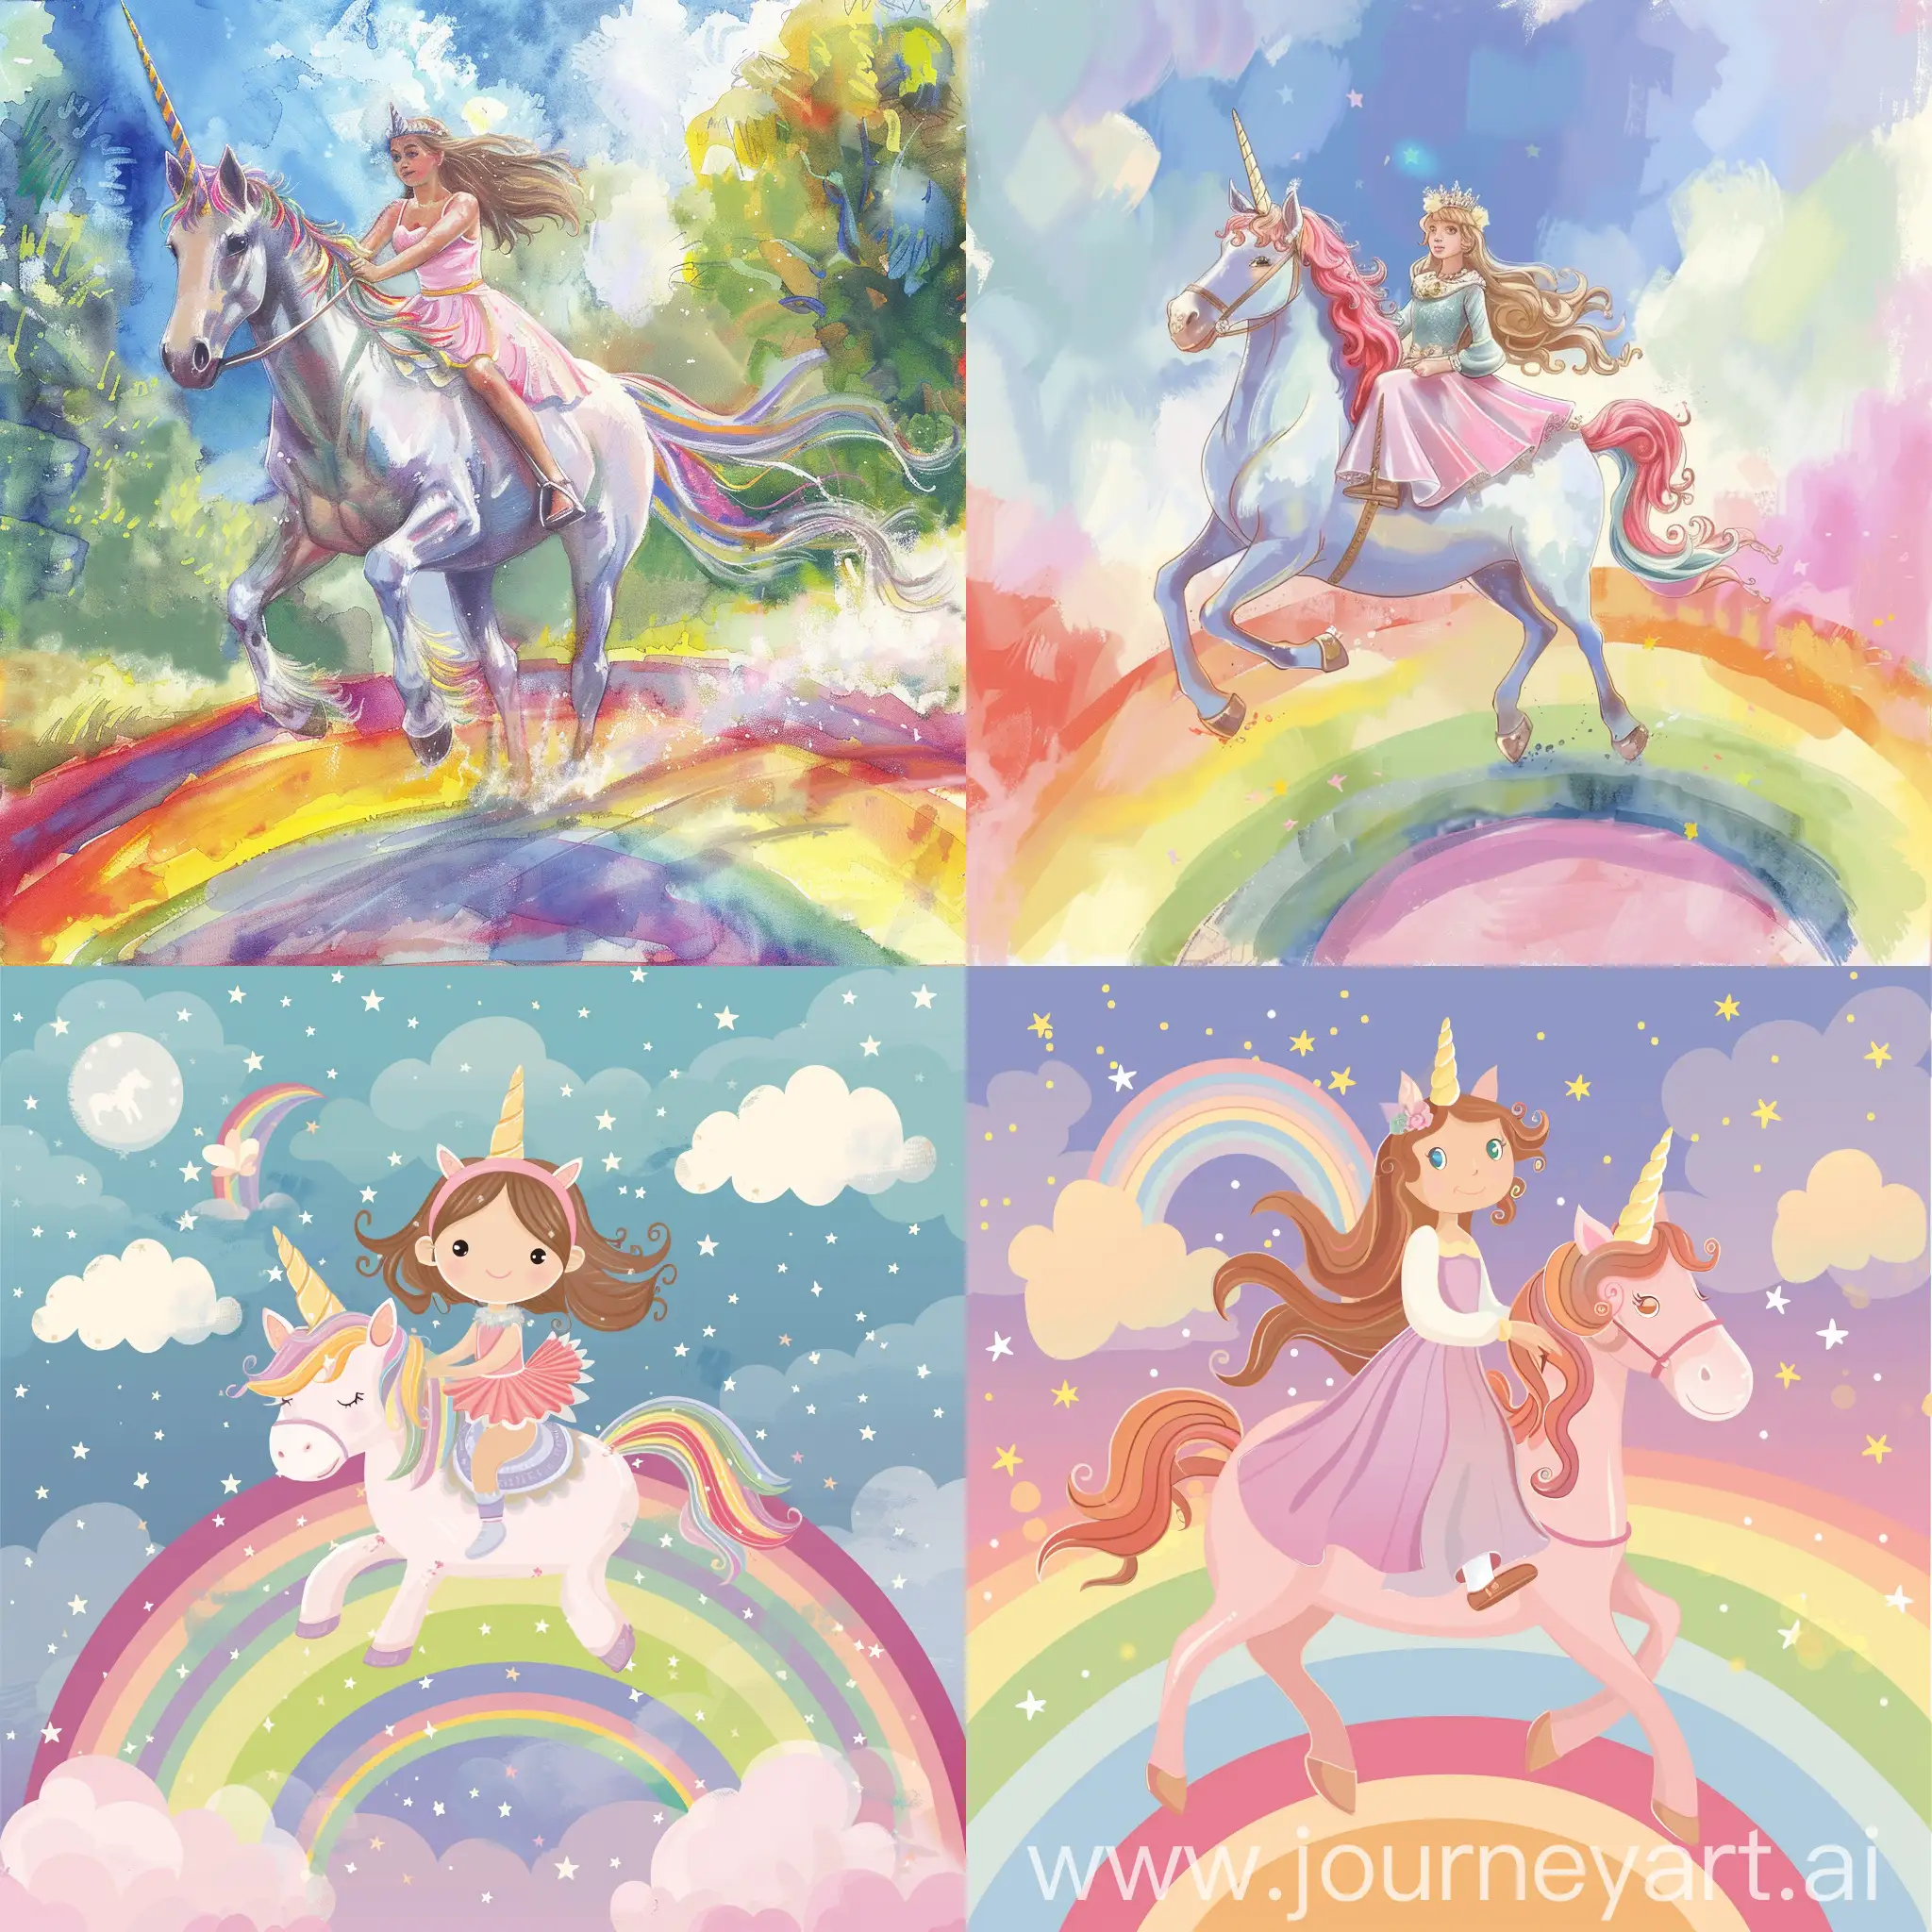 Princess riding unicorn over rainbow